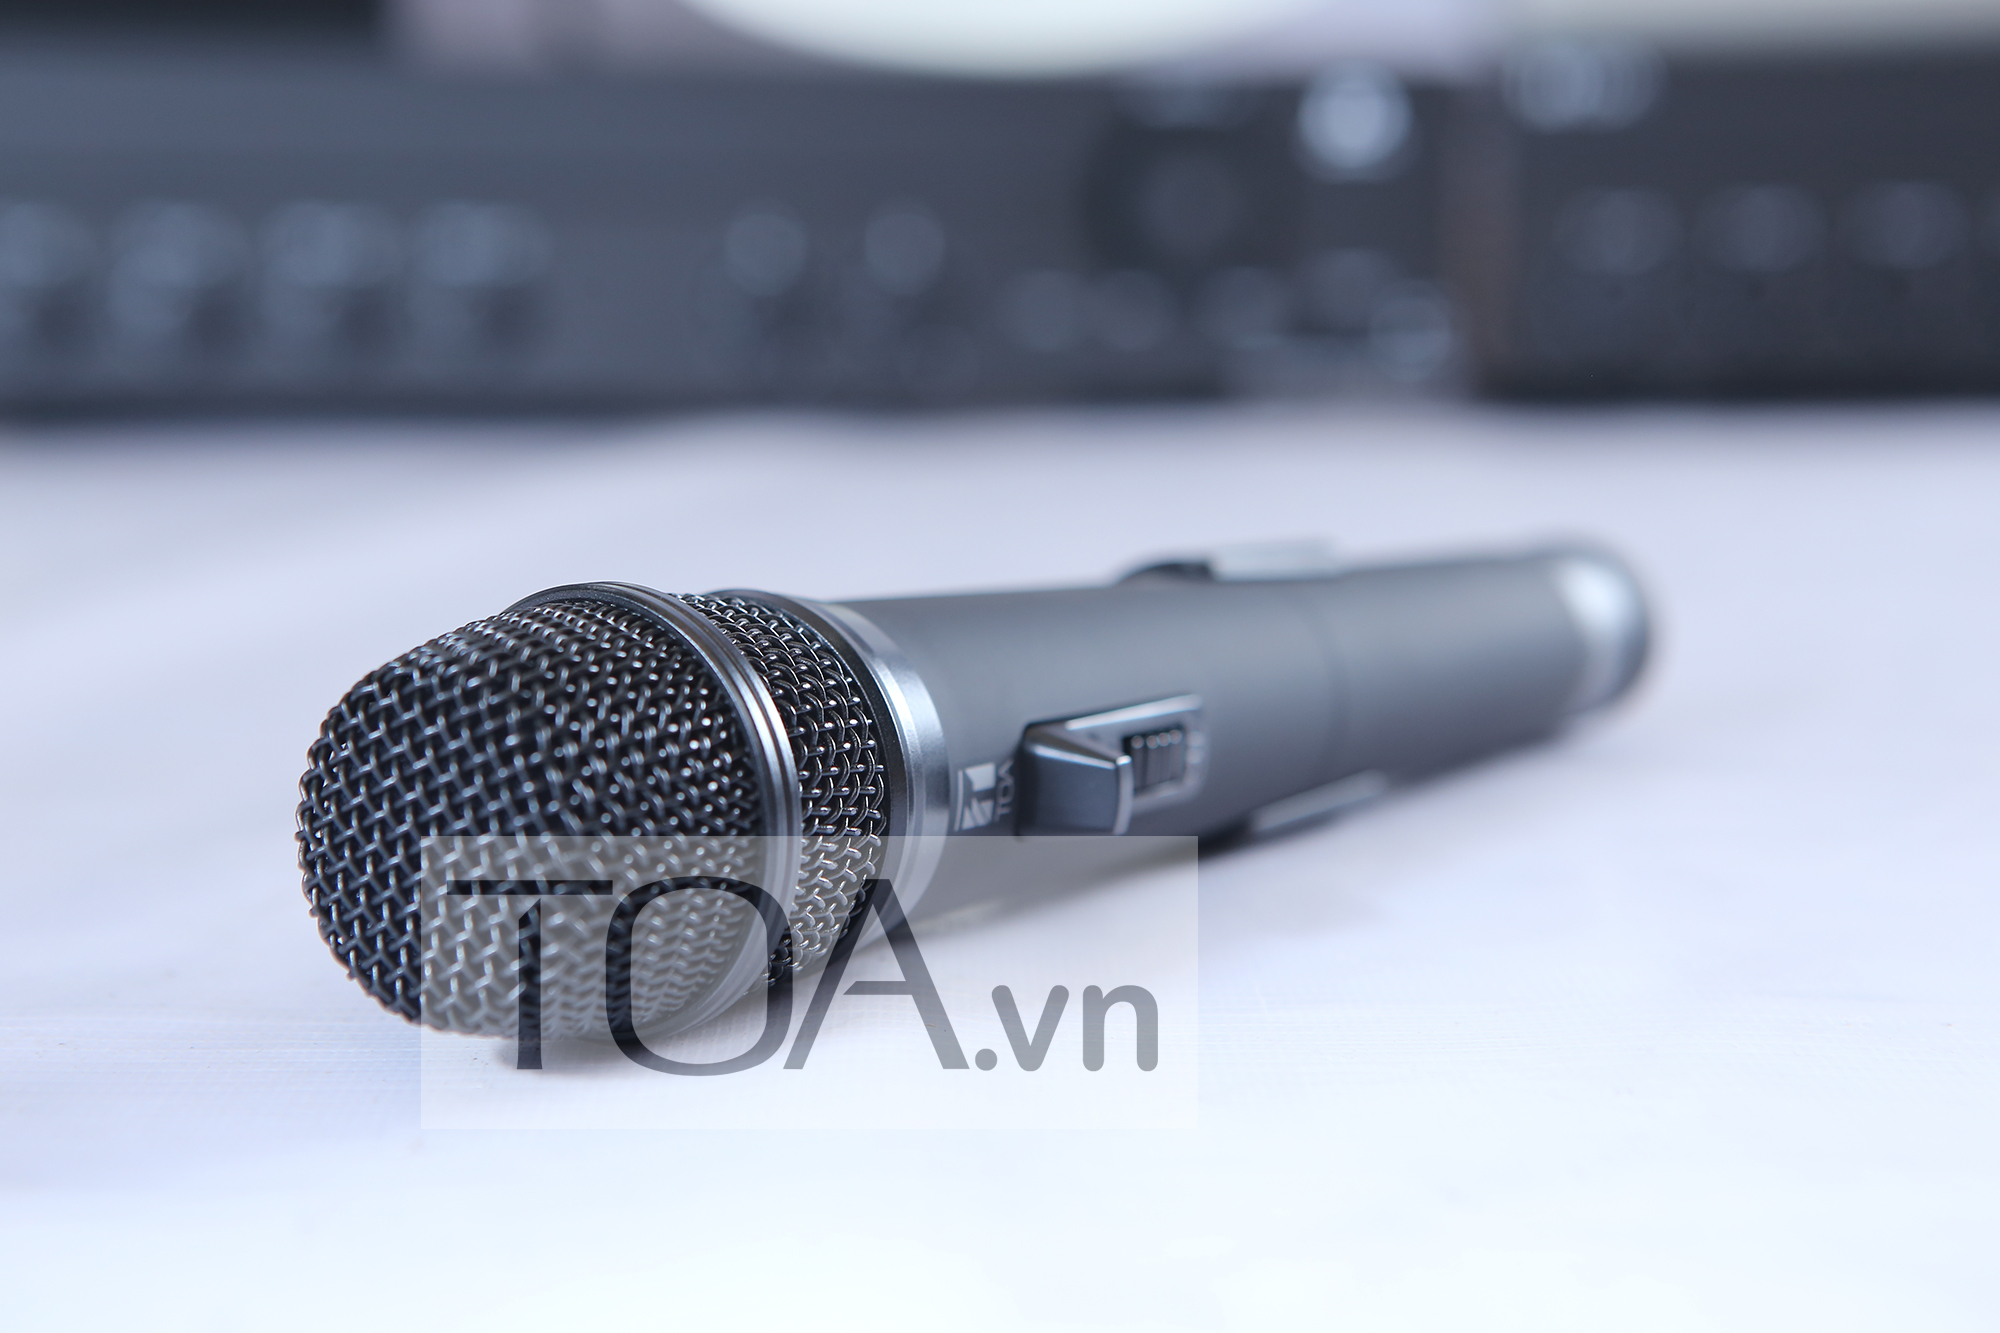 Microphone không dây TOA WM-5225